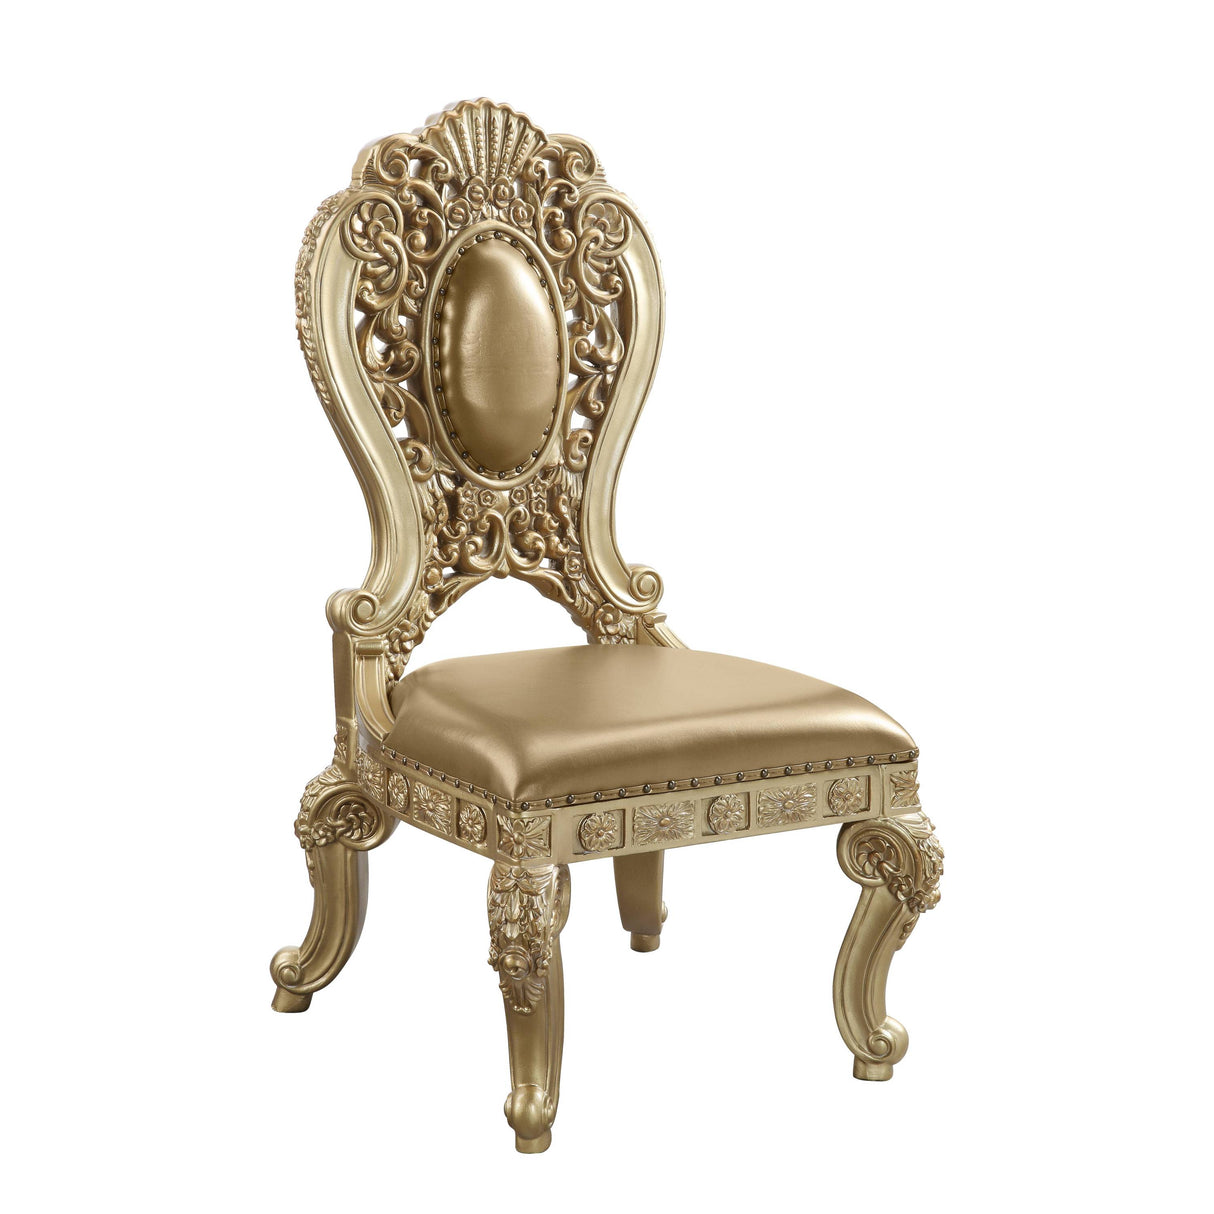 ACME Seville Side Chair (1Pc/1Ctn), Tan PU & Gold Finish DN00458 - Home Elegance USA